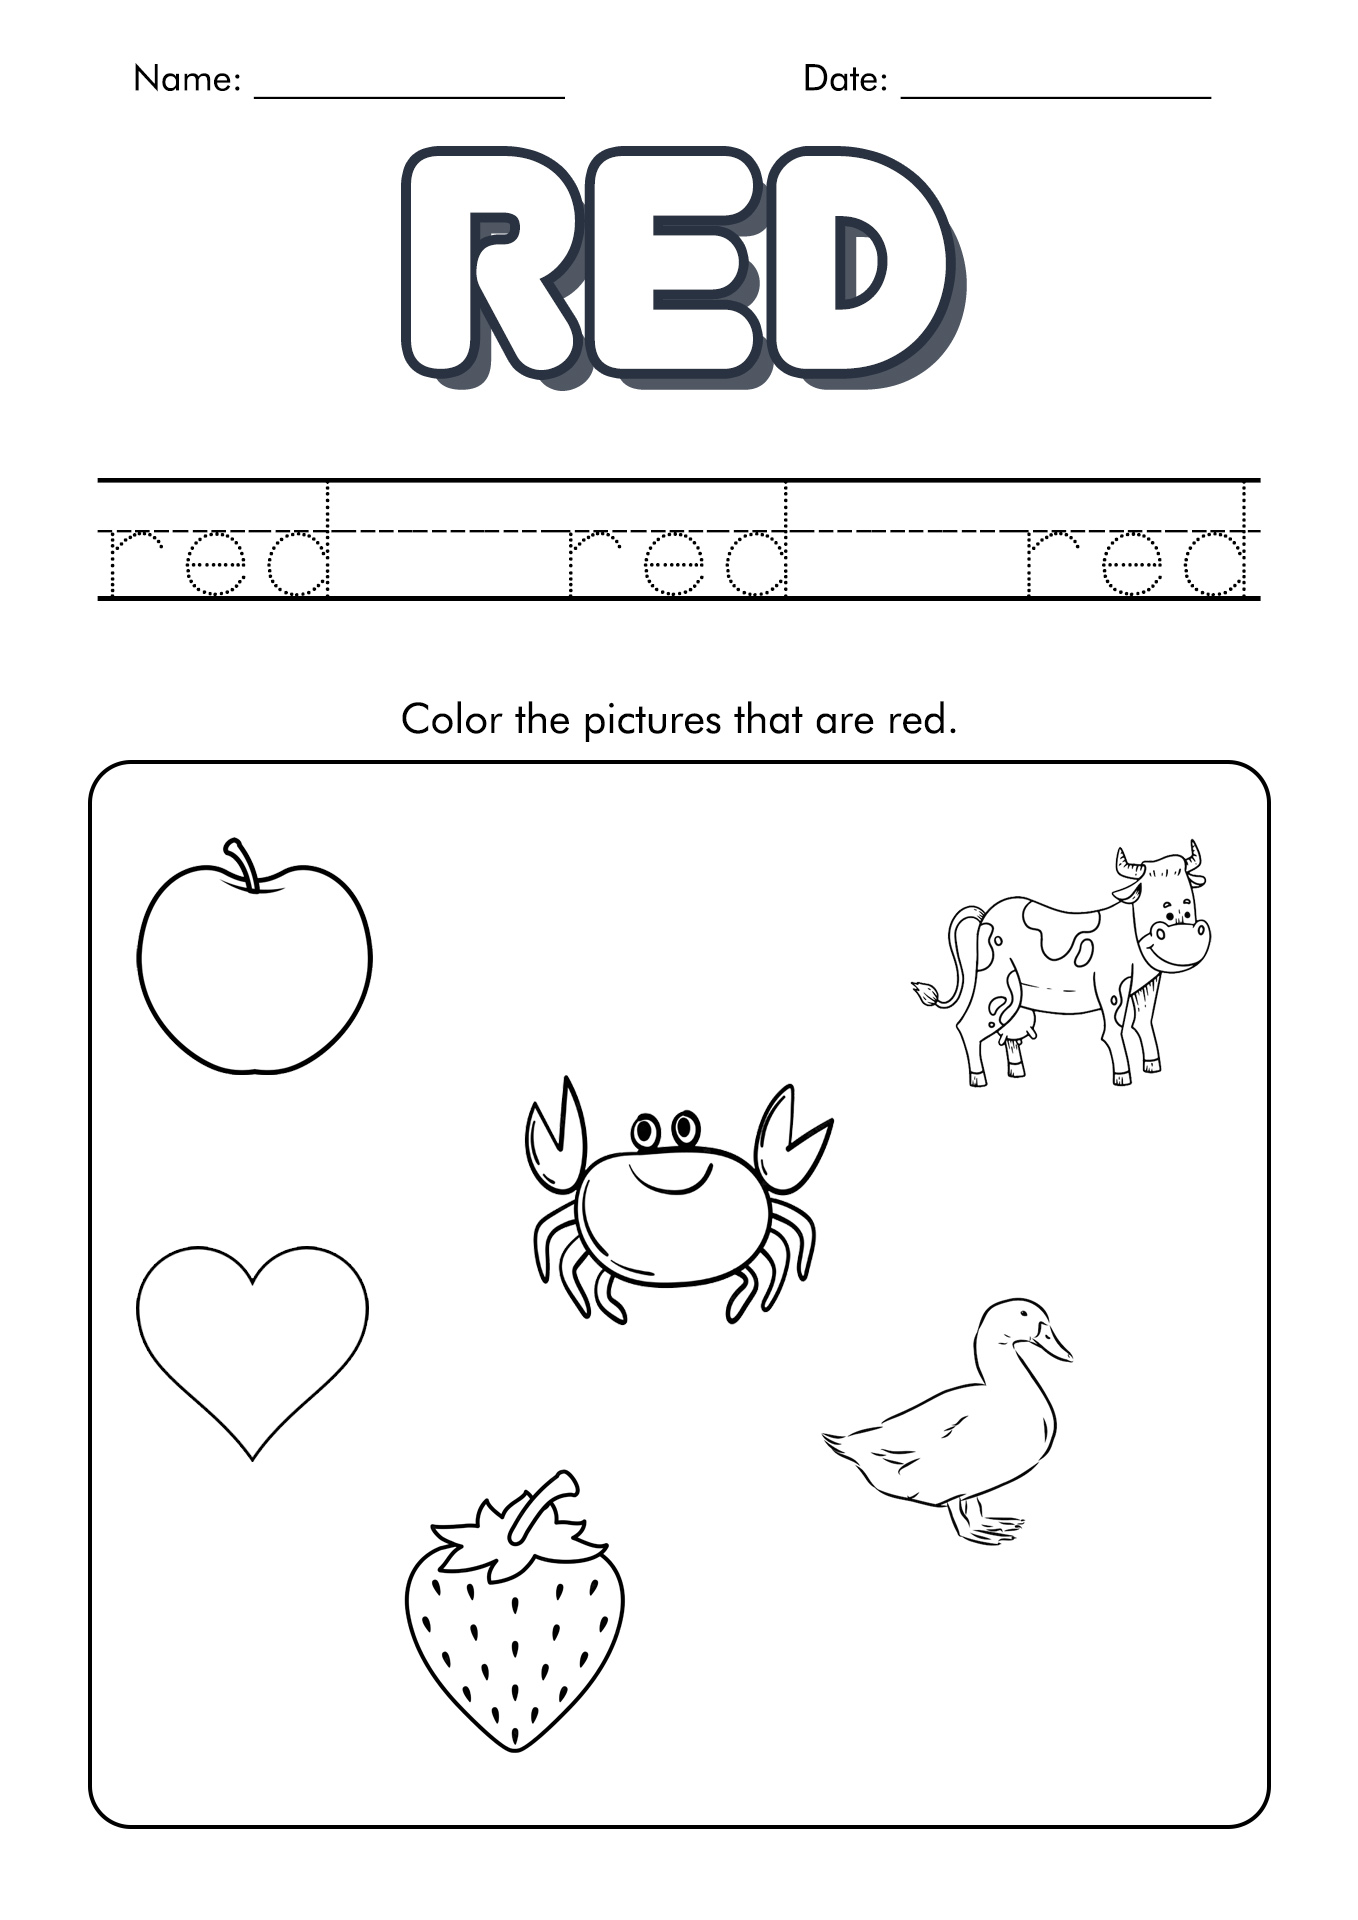 10 Best Images Of Red Color Worksheets Printable Color Red Worksheets 